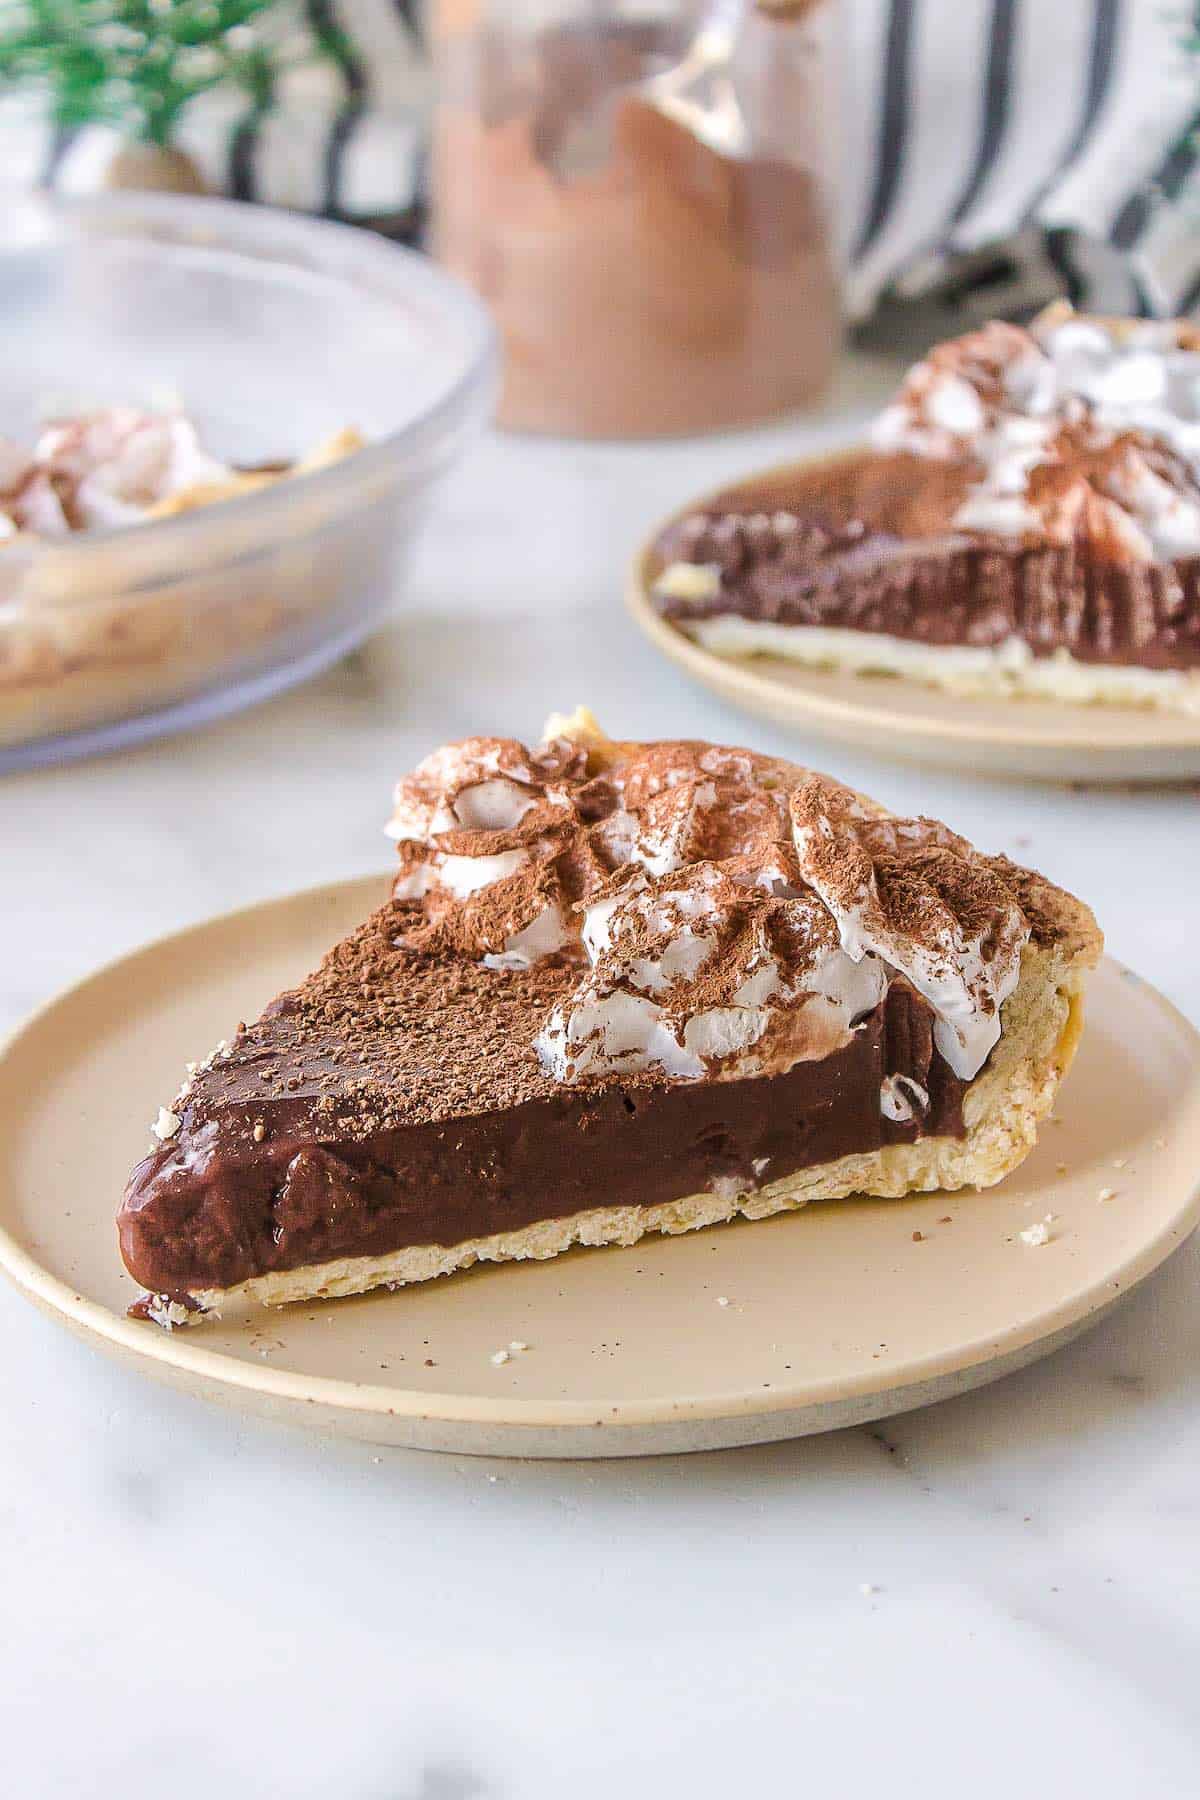 A creamy chocolate pie slice on a plate.